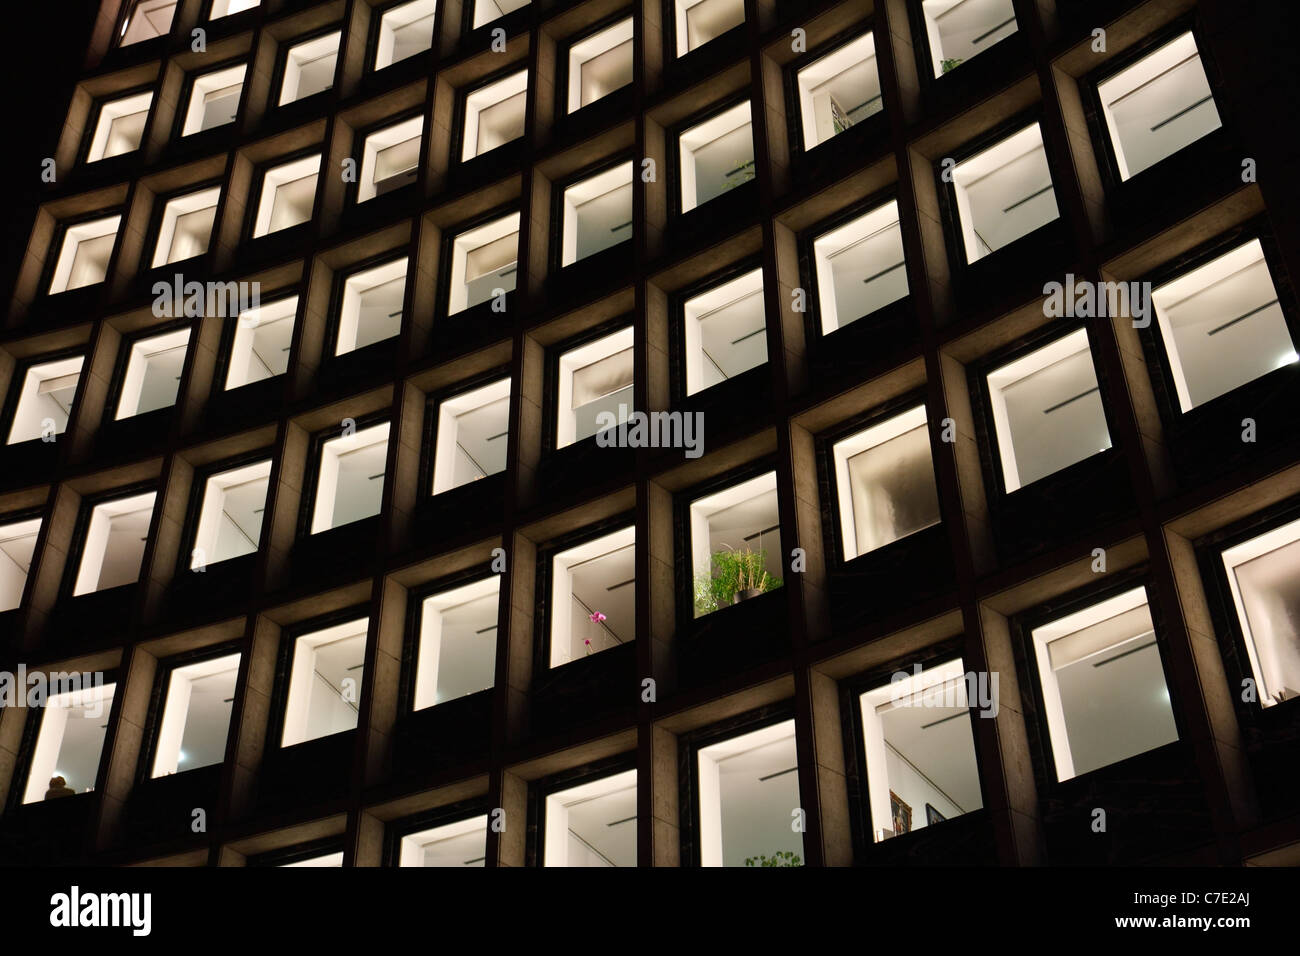 Illuminated windows of an office building at night, Berlin, Germany Stock Photo